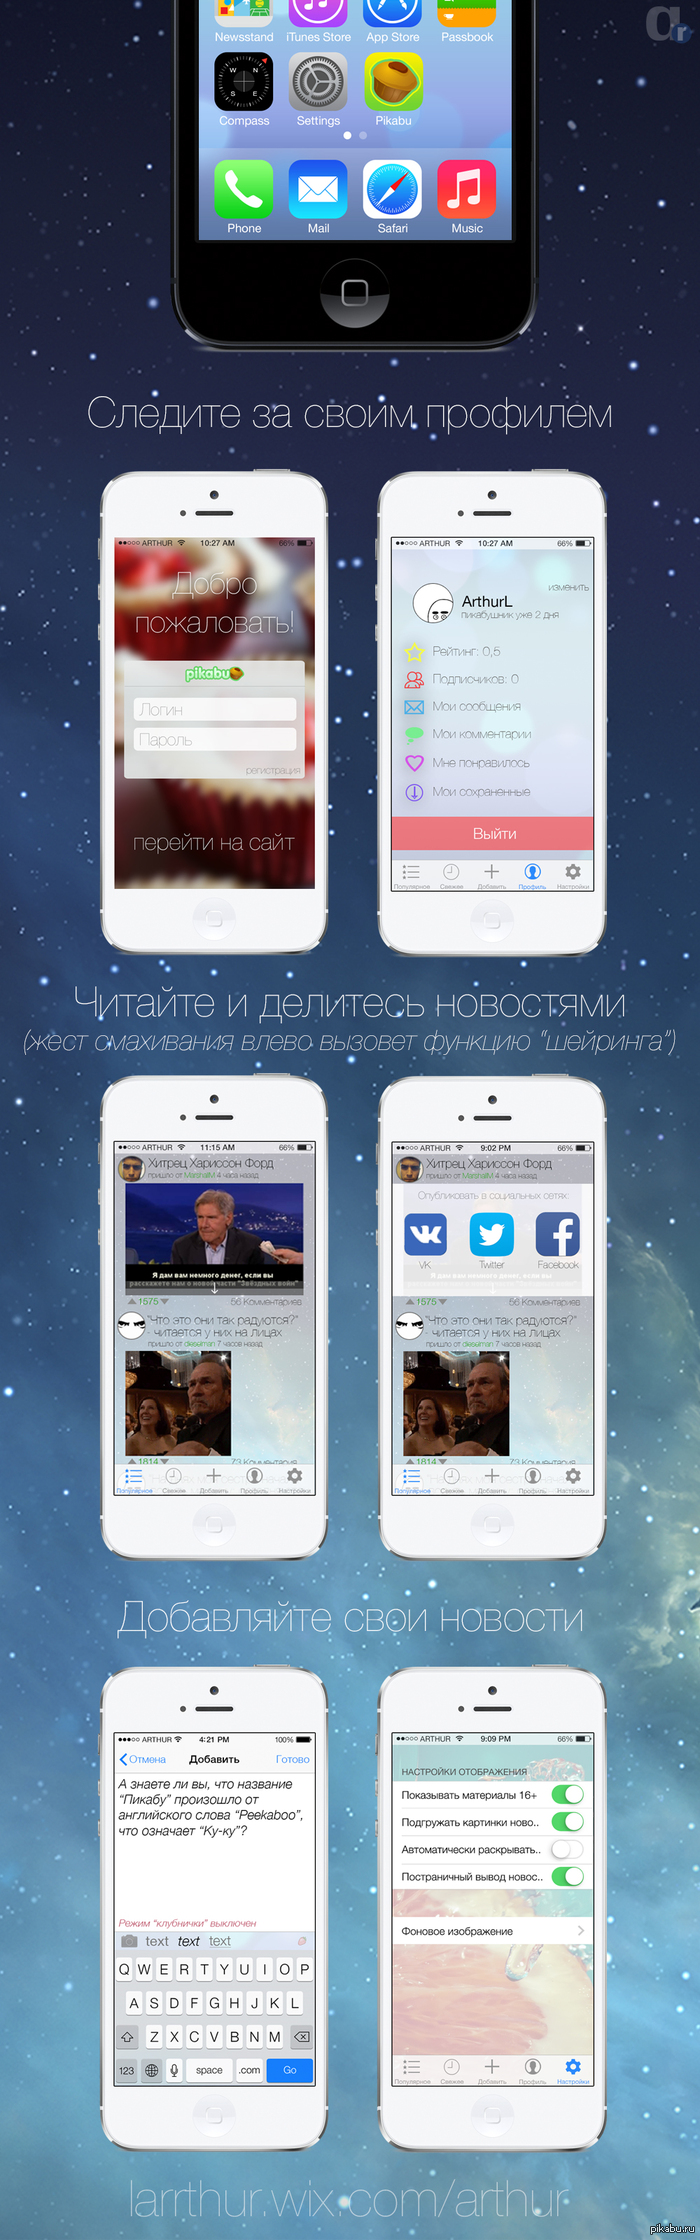   Pikabu  iOS7   http://s020.radikal.ru/i716/1308/31/d88d29eaf2f5.png